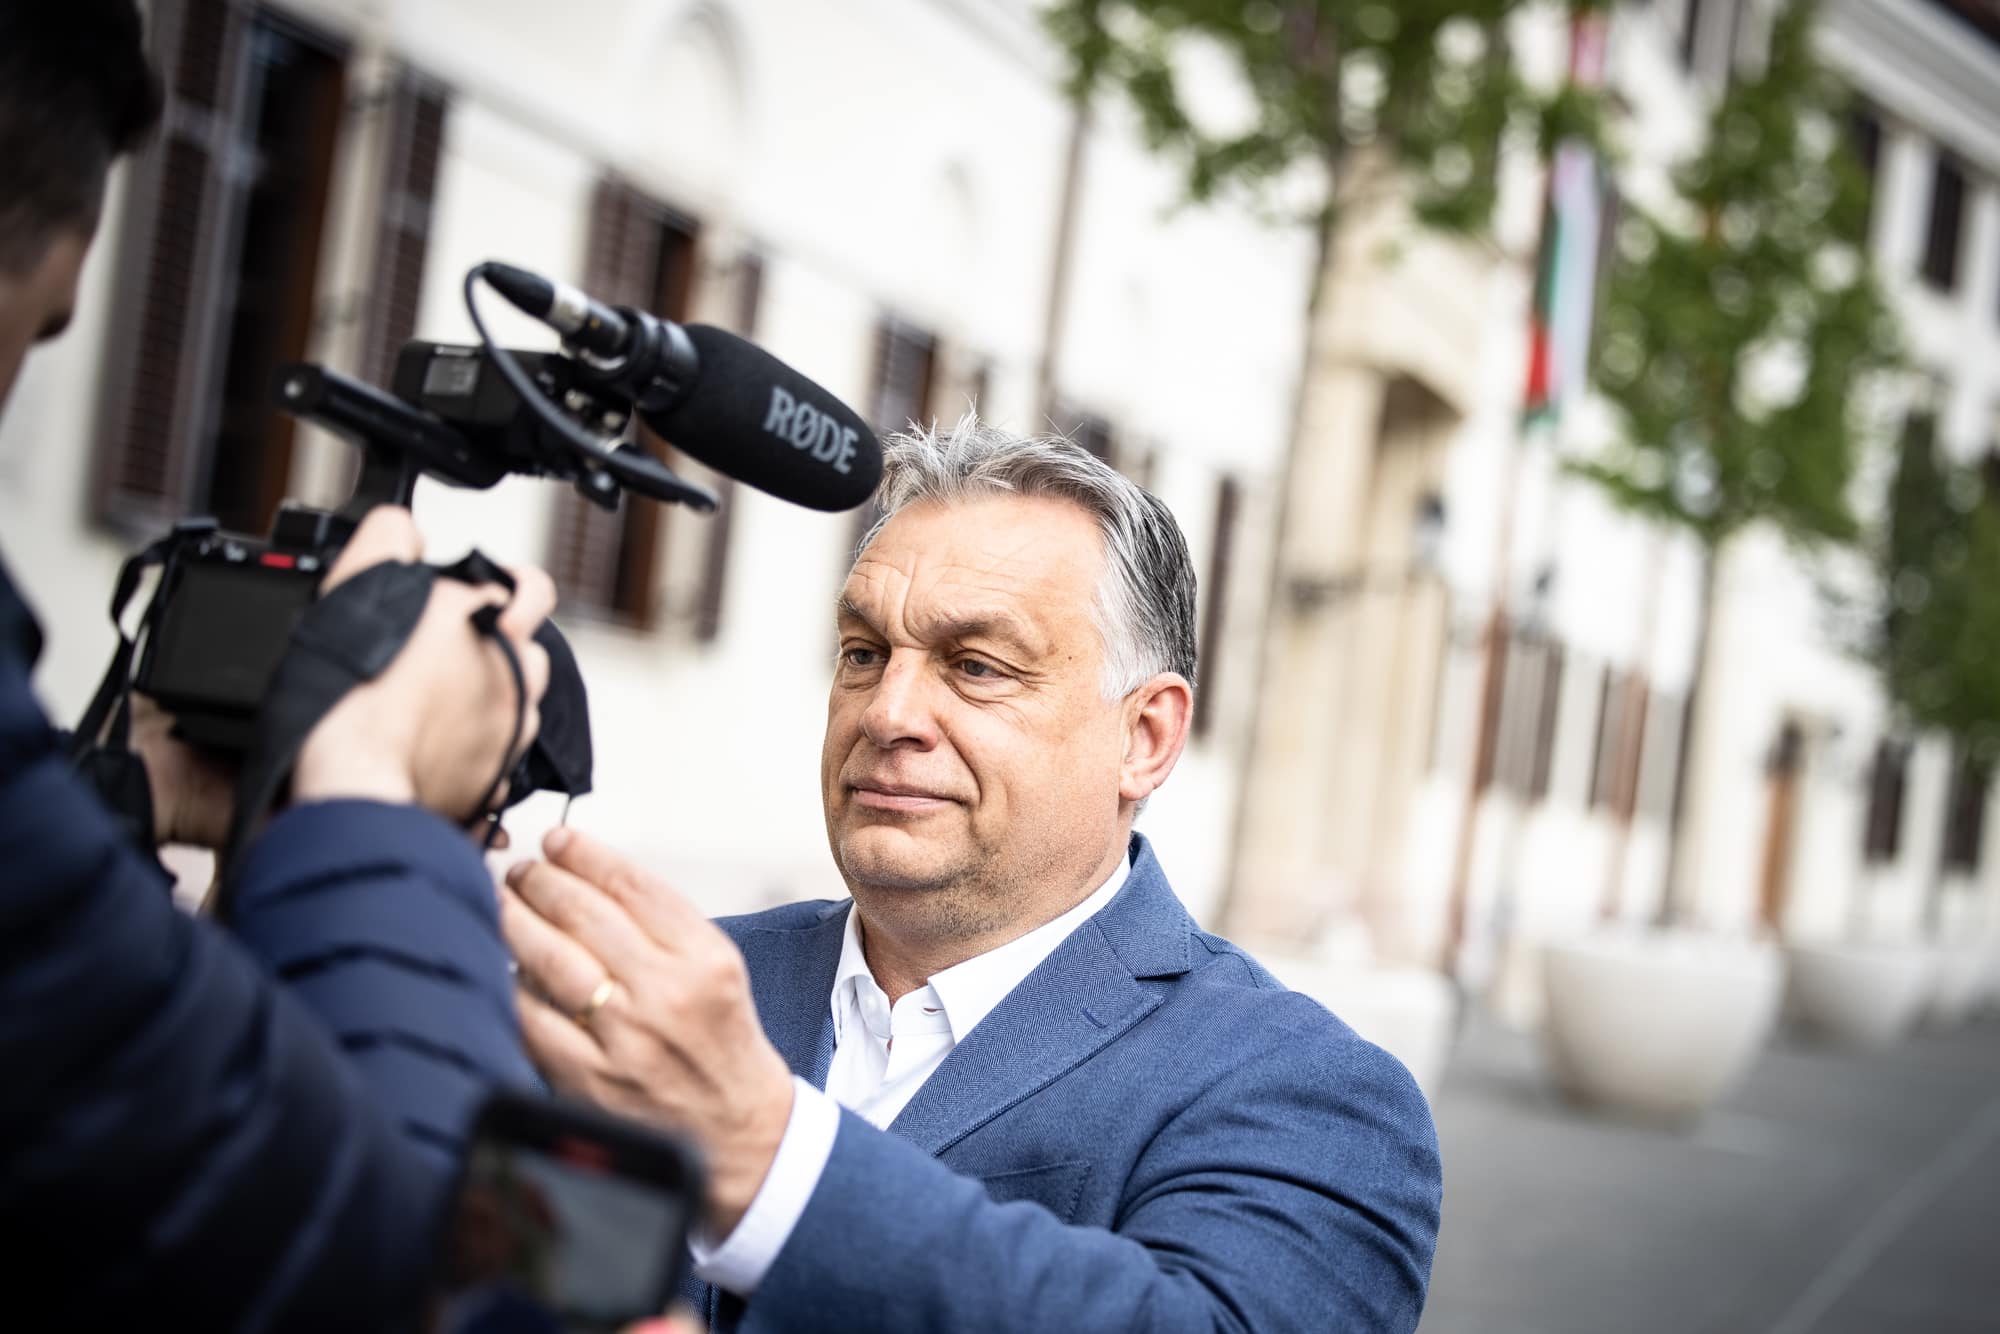 orbán with camera